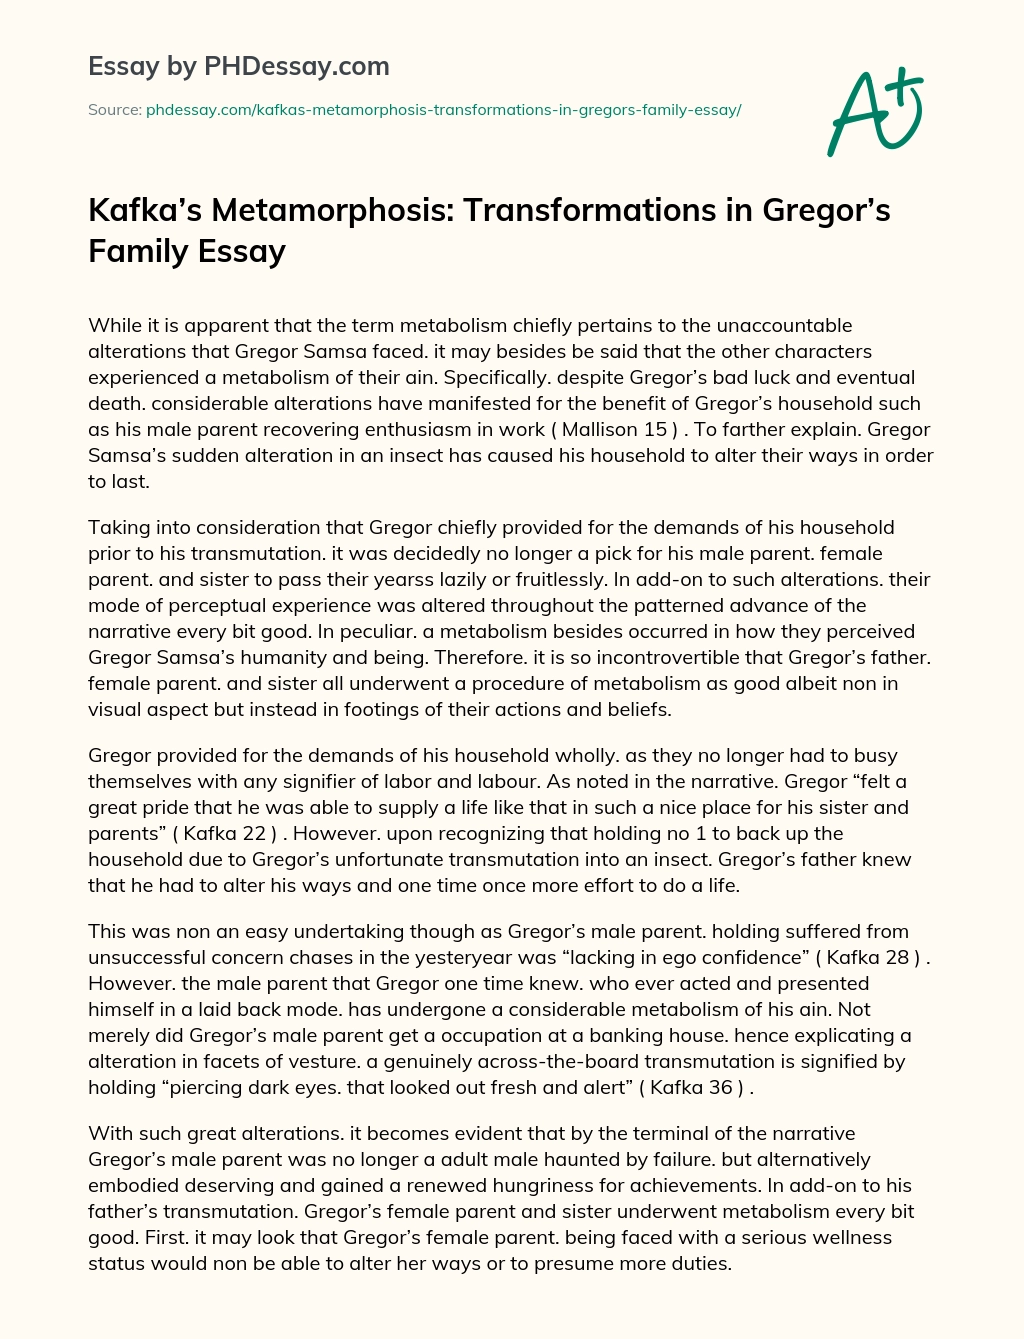 Kafka’s Metamorphosis: Transformations in Gregor’s Family Essay essay